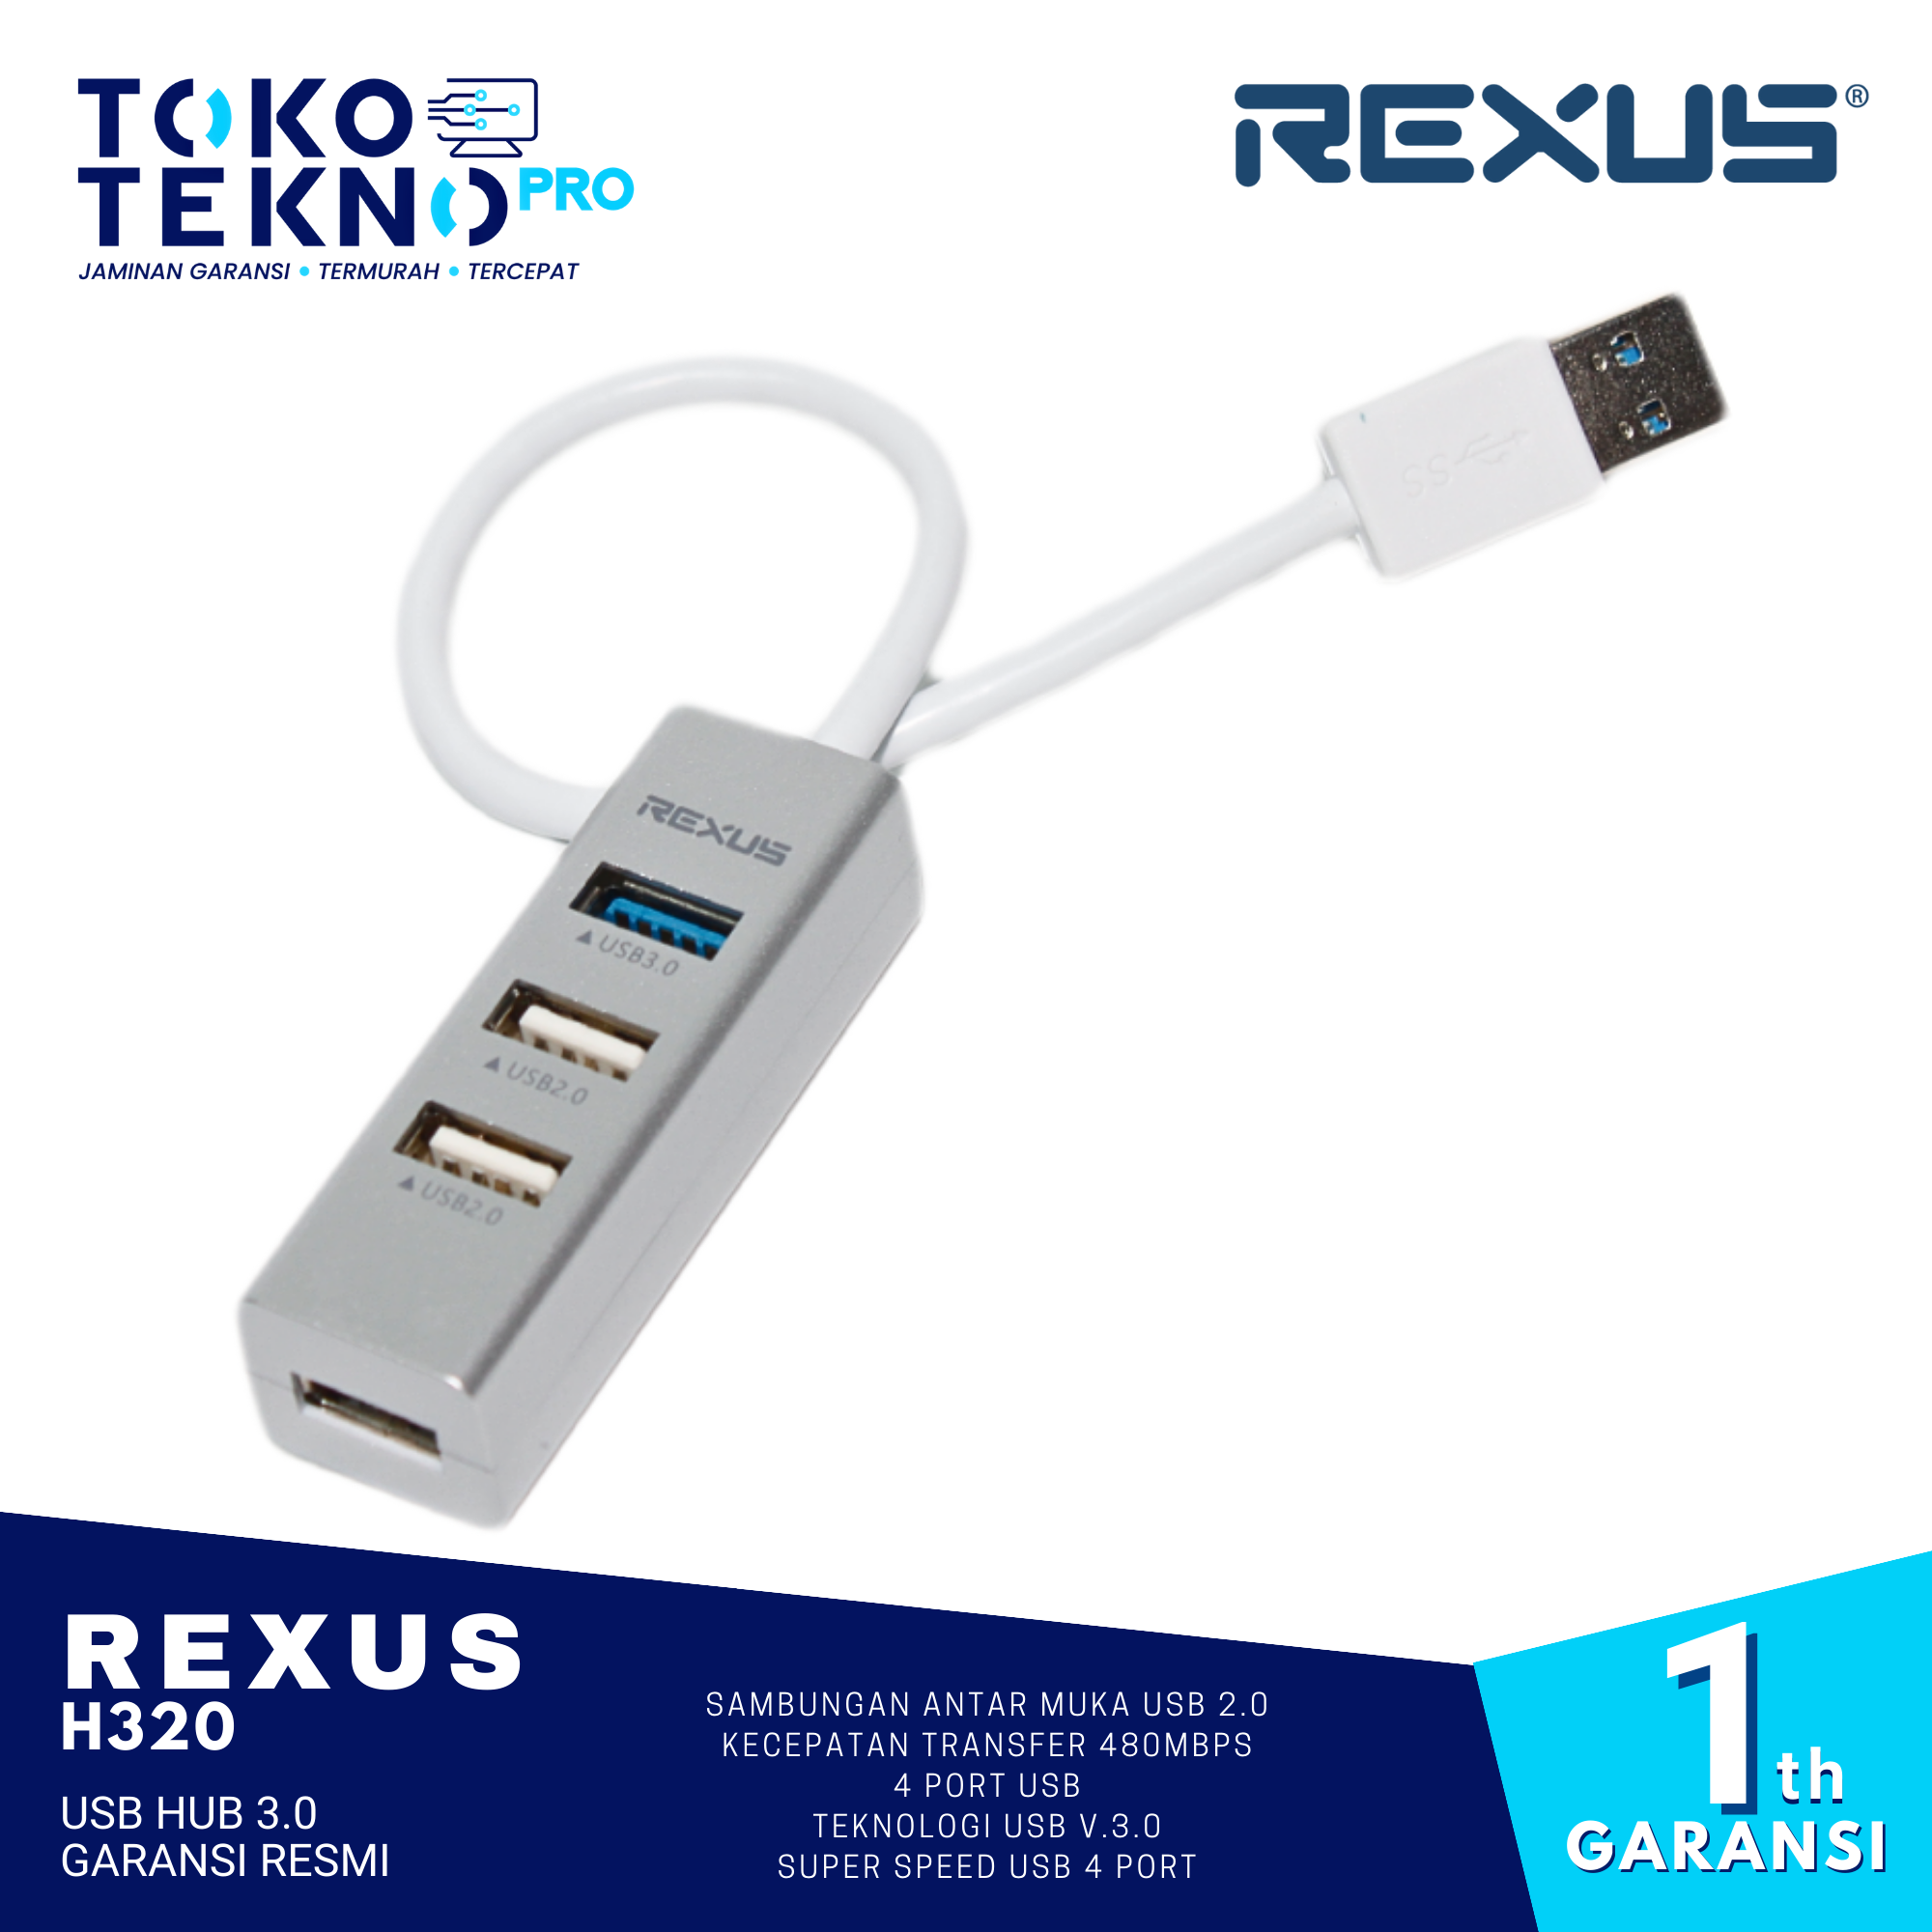 Rexus H320 USB Hub 3.0